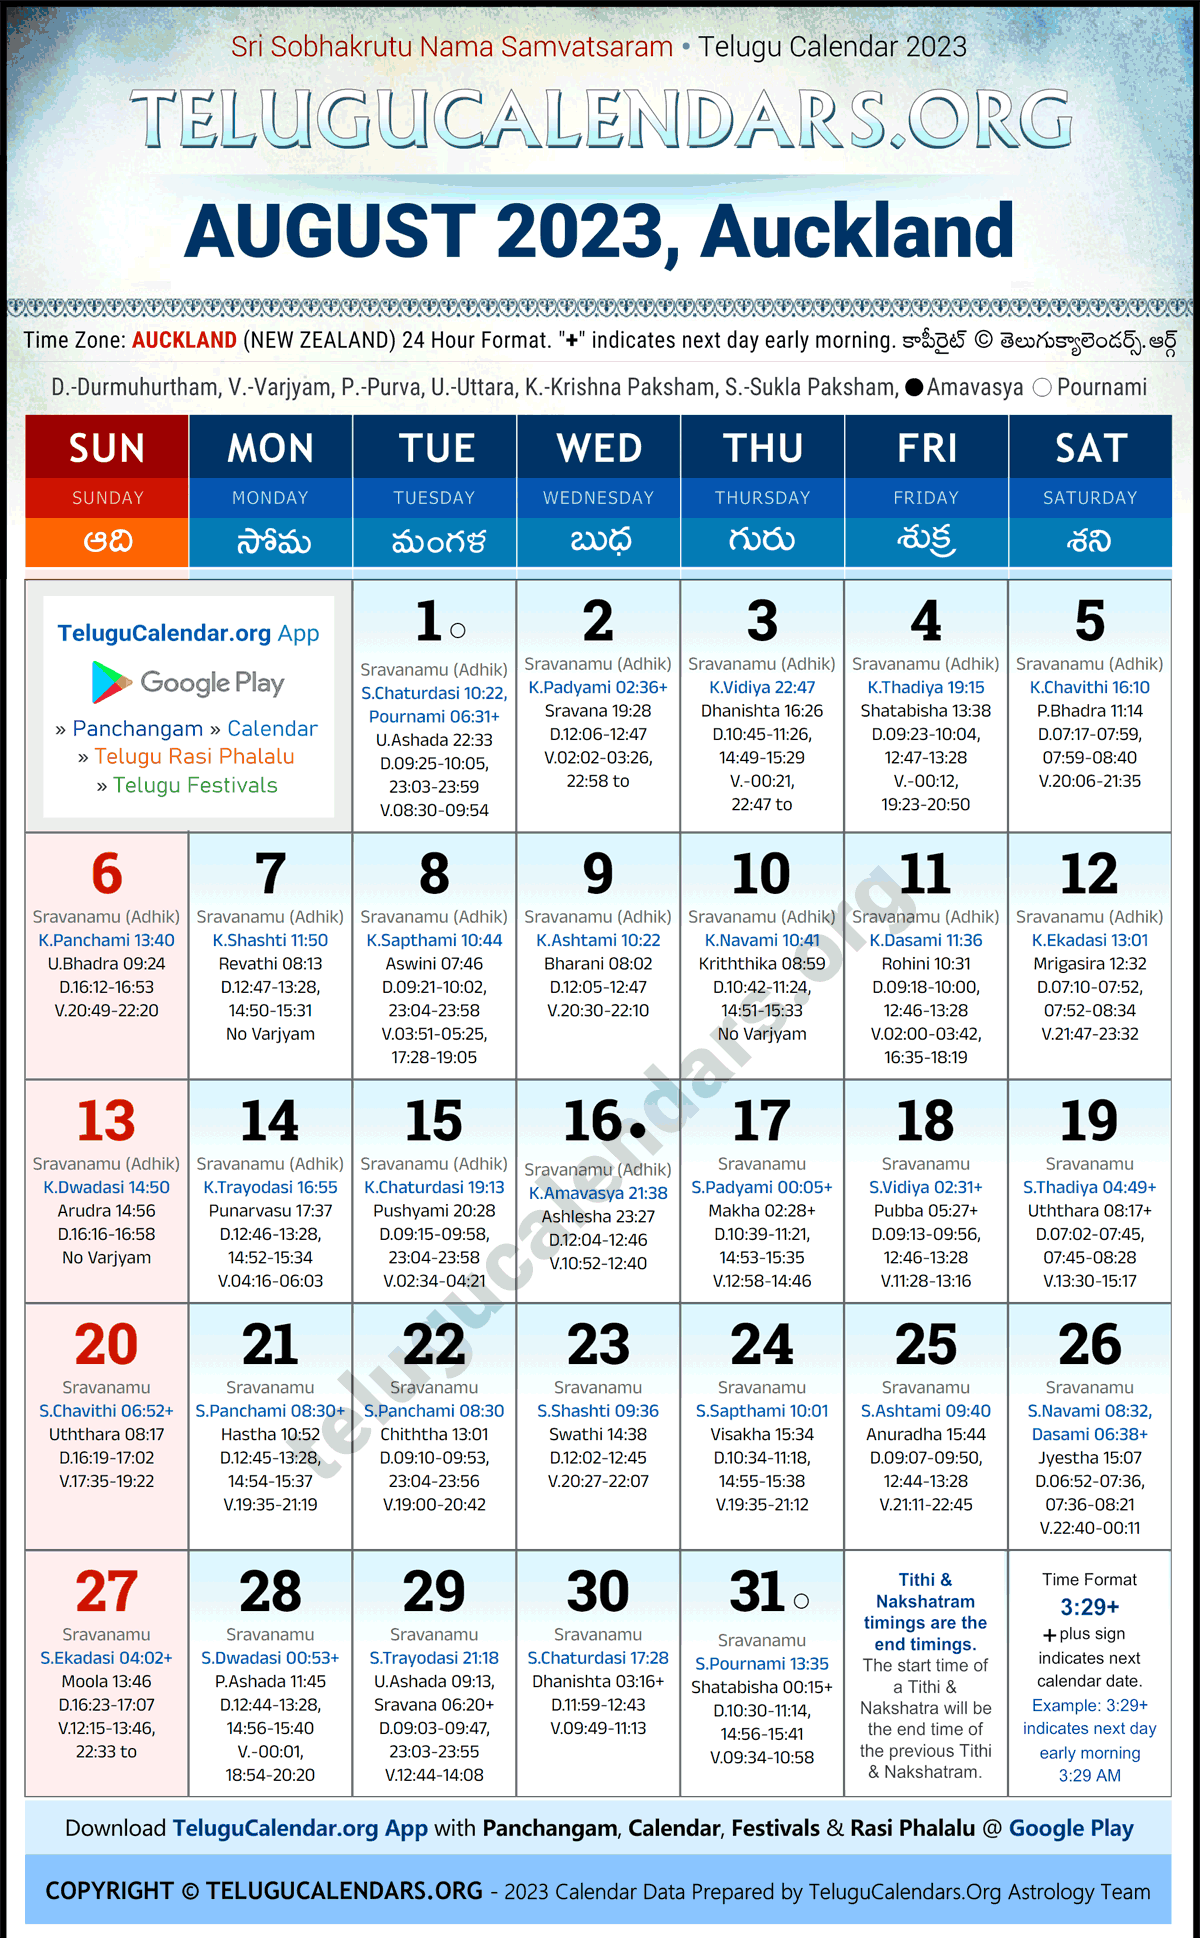 Telugu Calendar 2023 August Festivals for Auckland